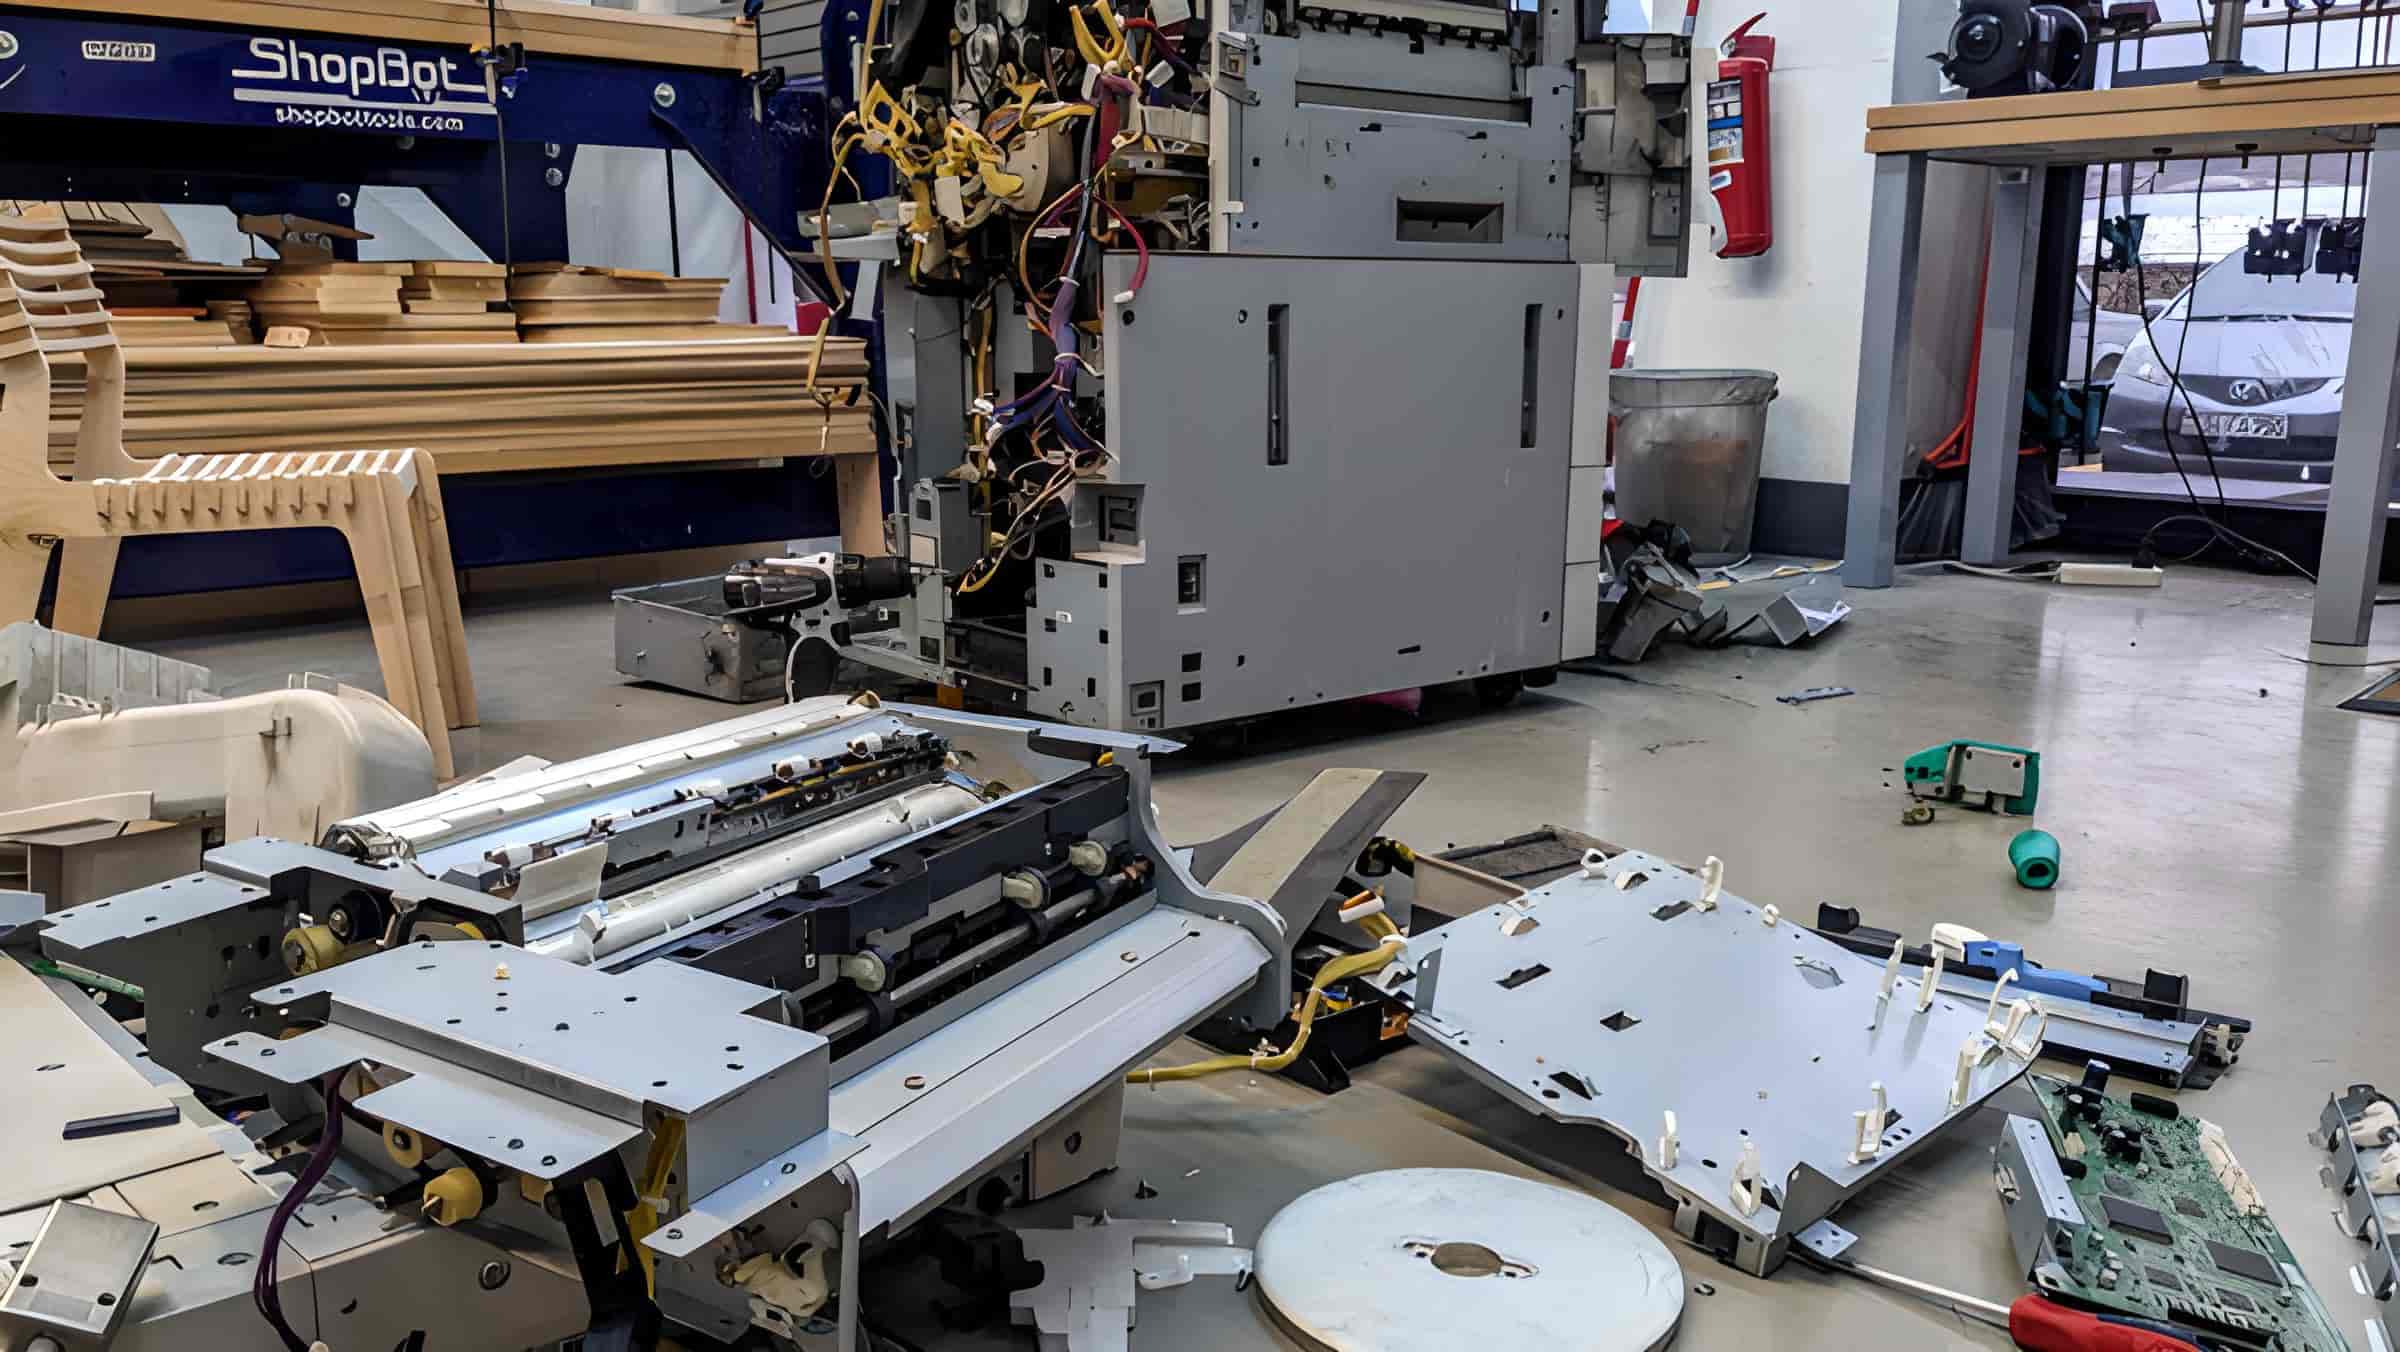 Dismantling printer